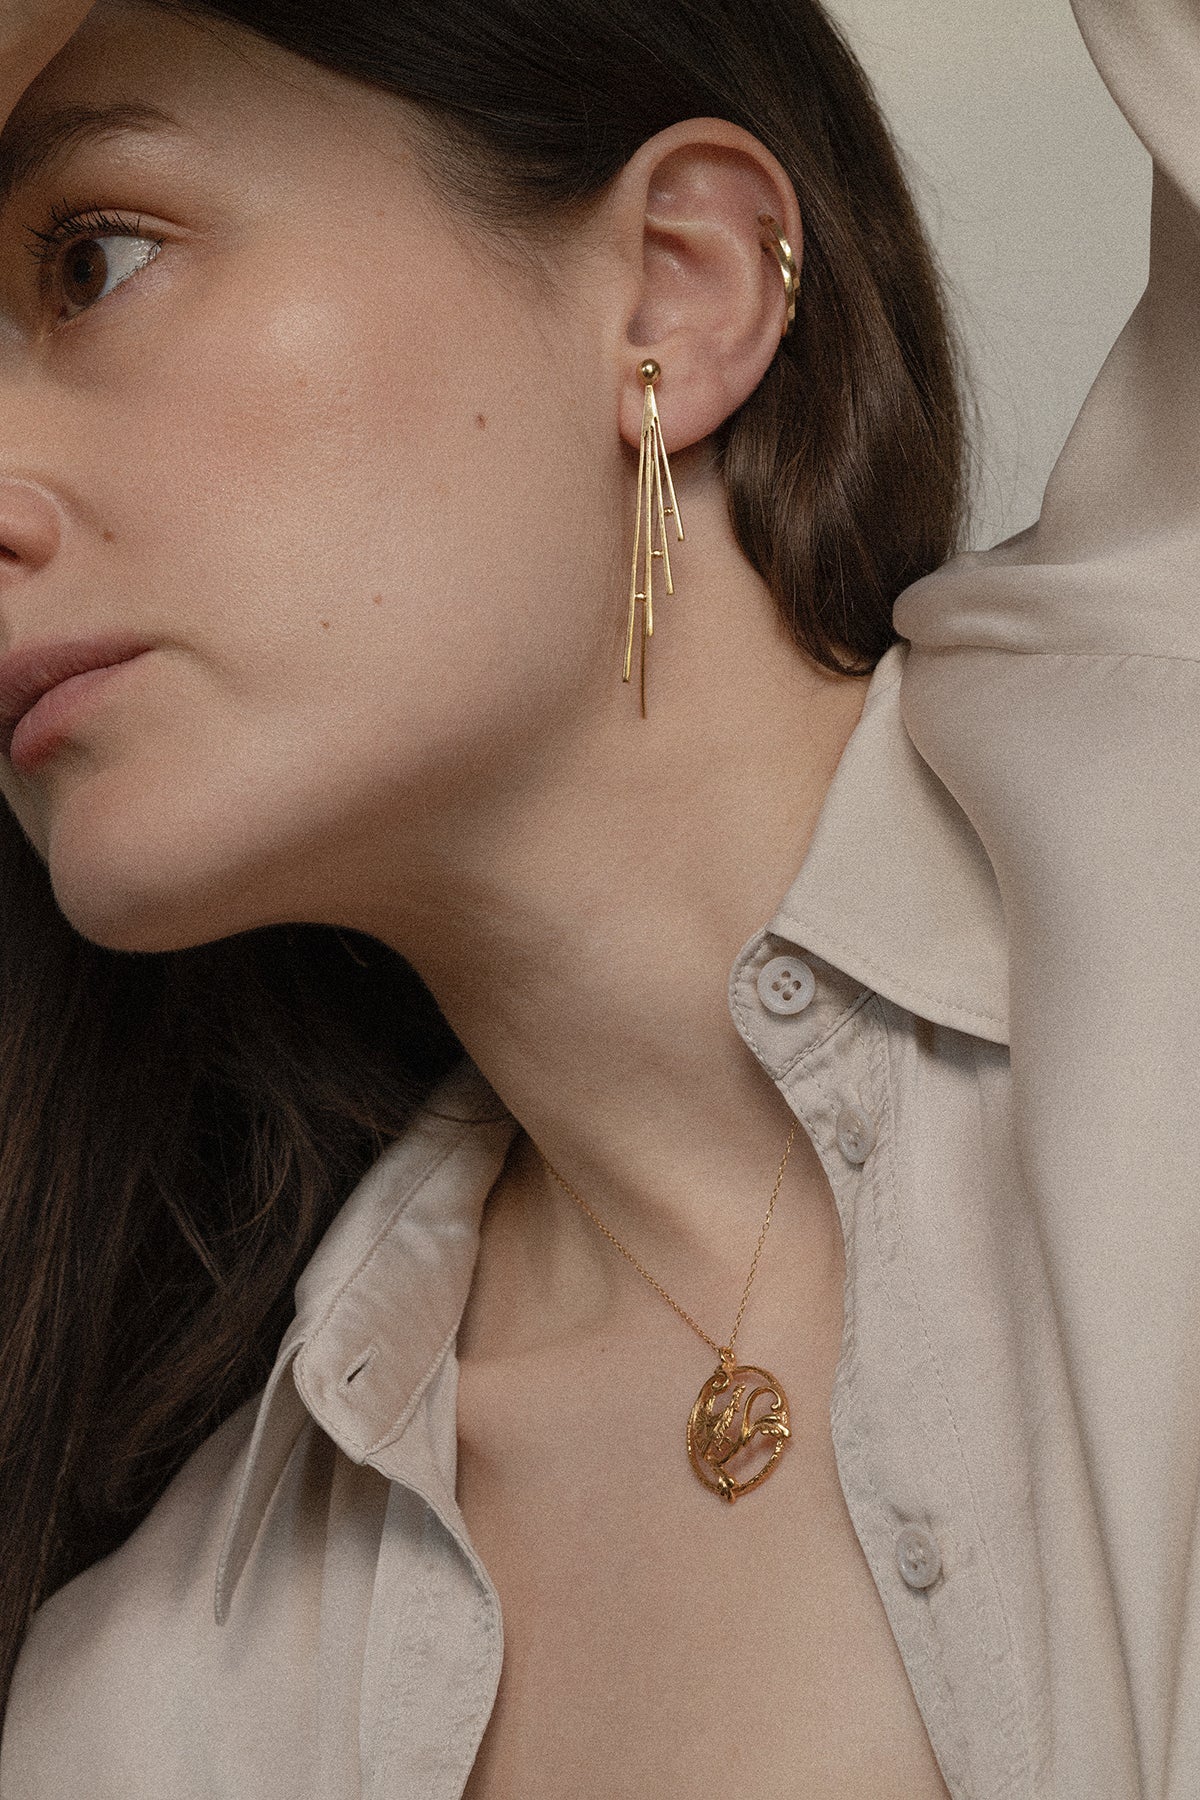 LAGA rose earrings